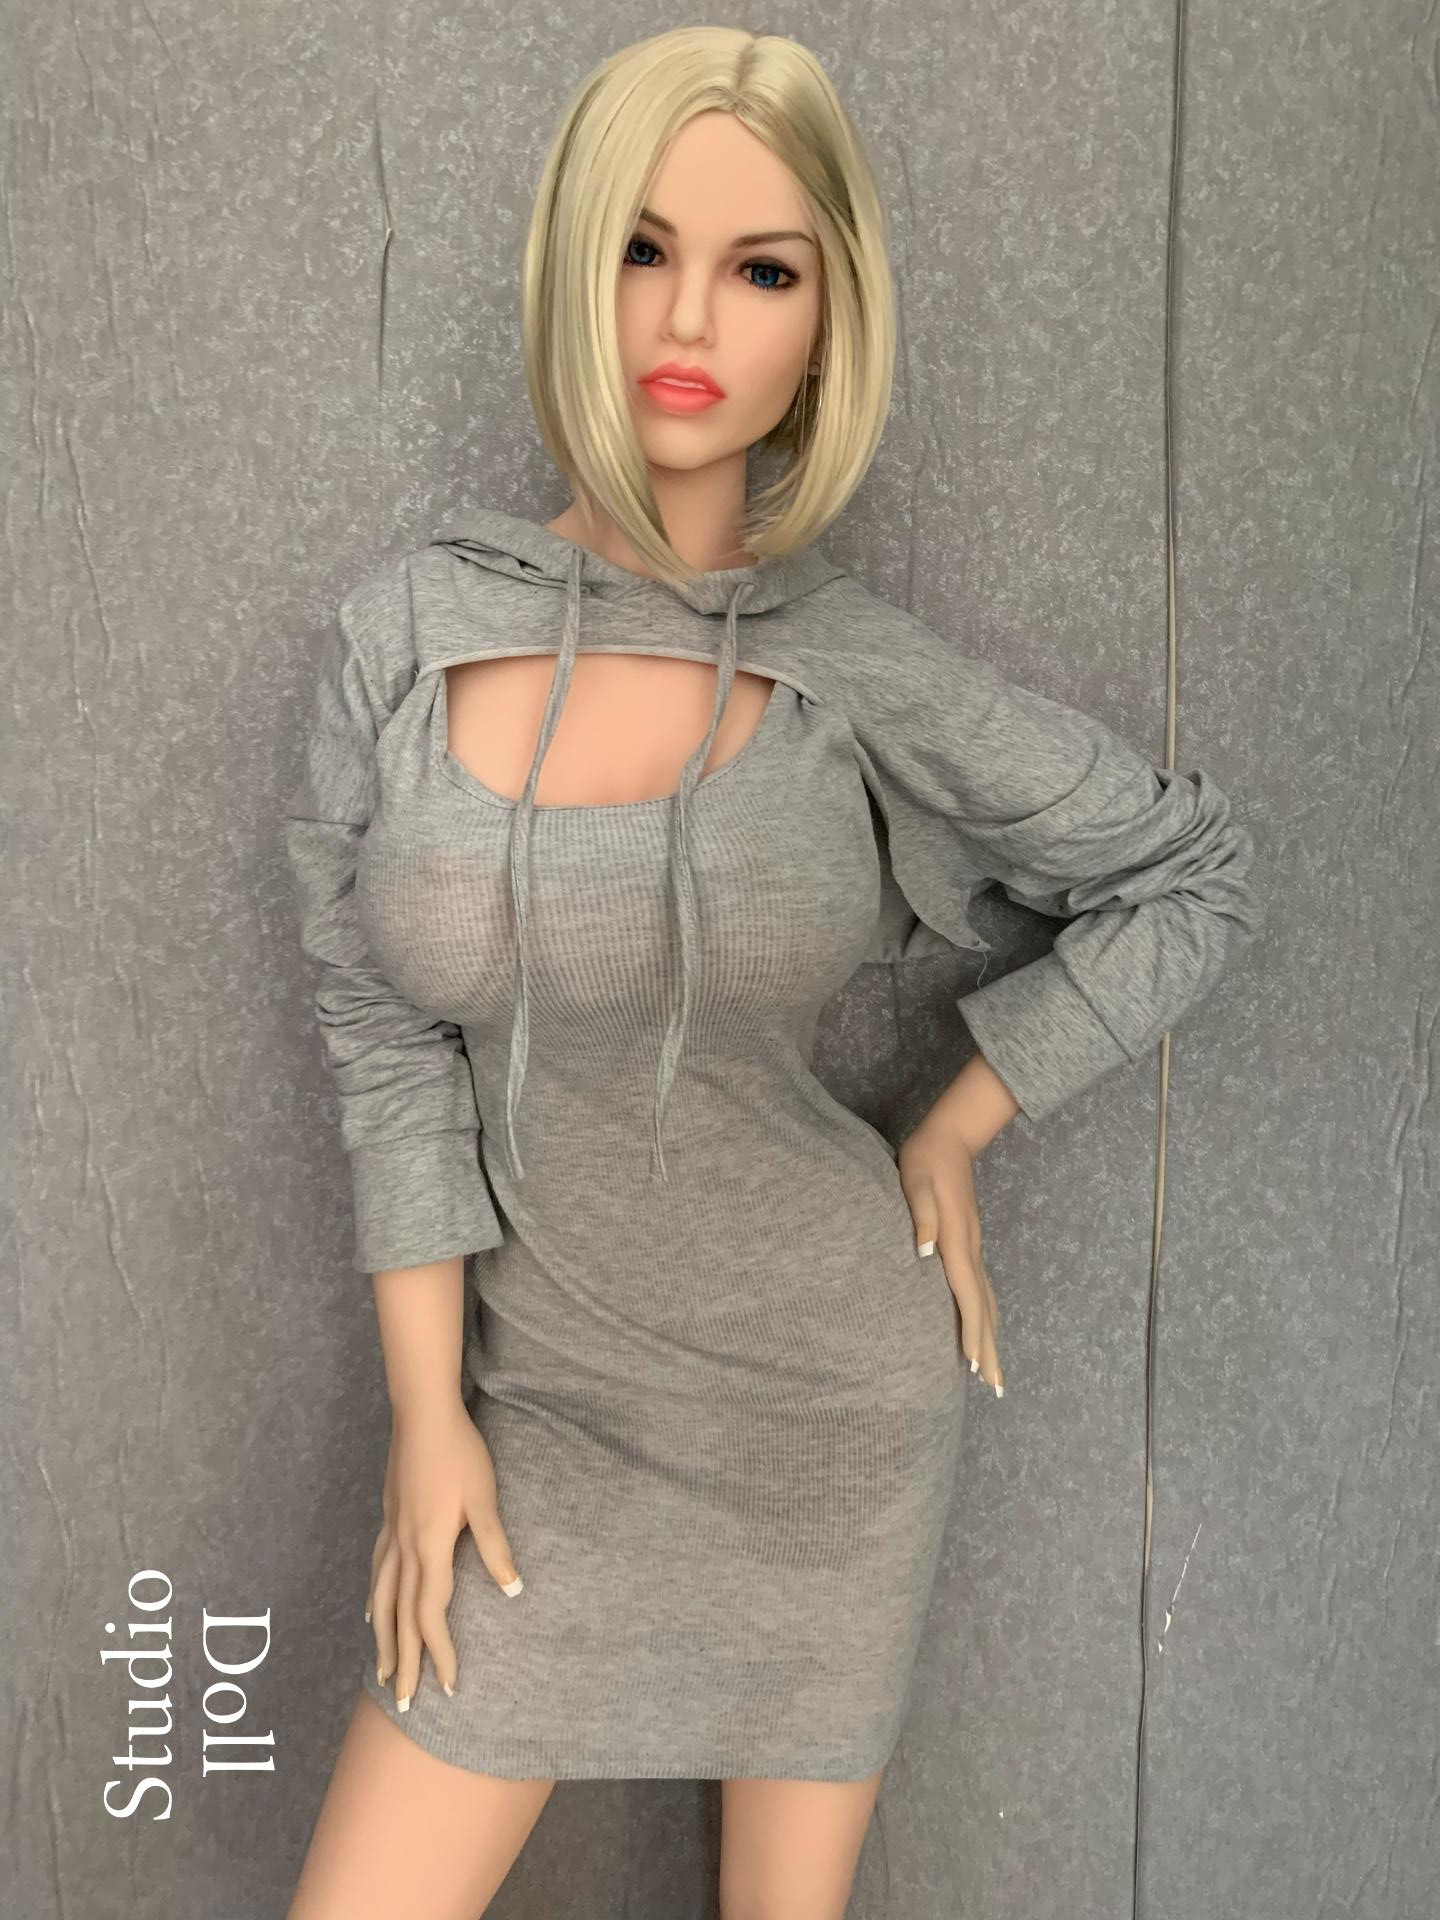 Doll Sweater Dress Blonde Short Hair 1440x1920